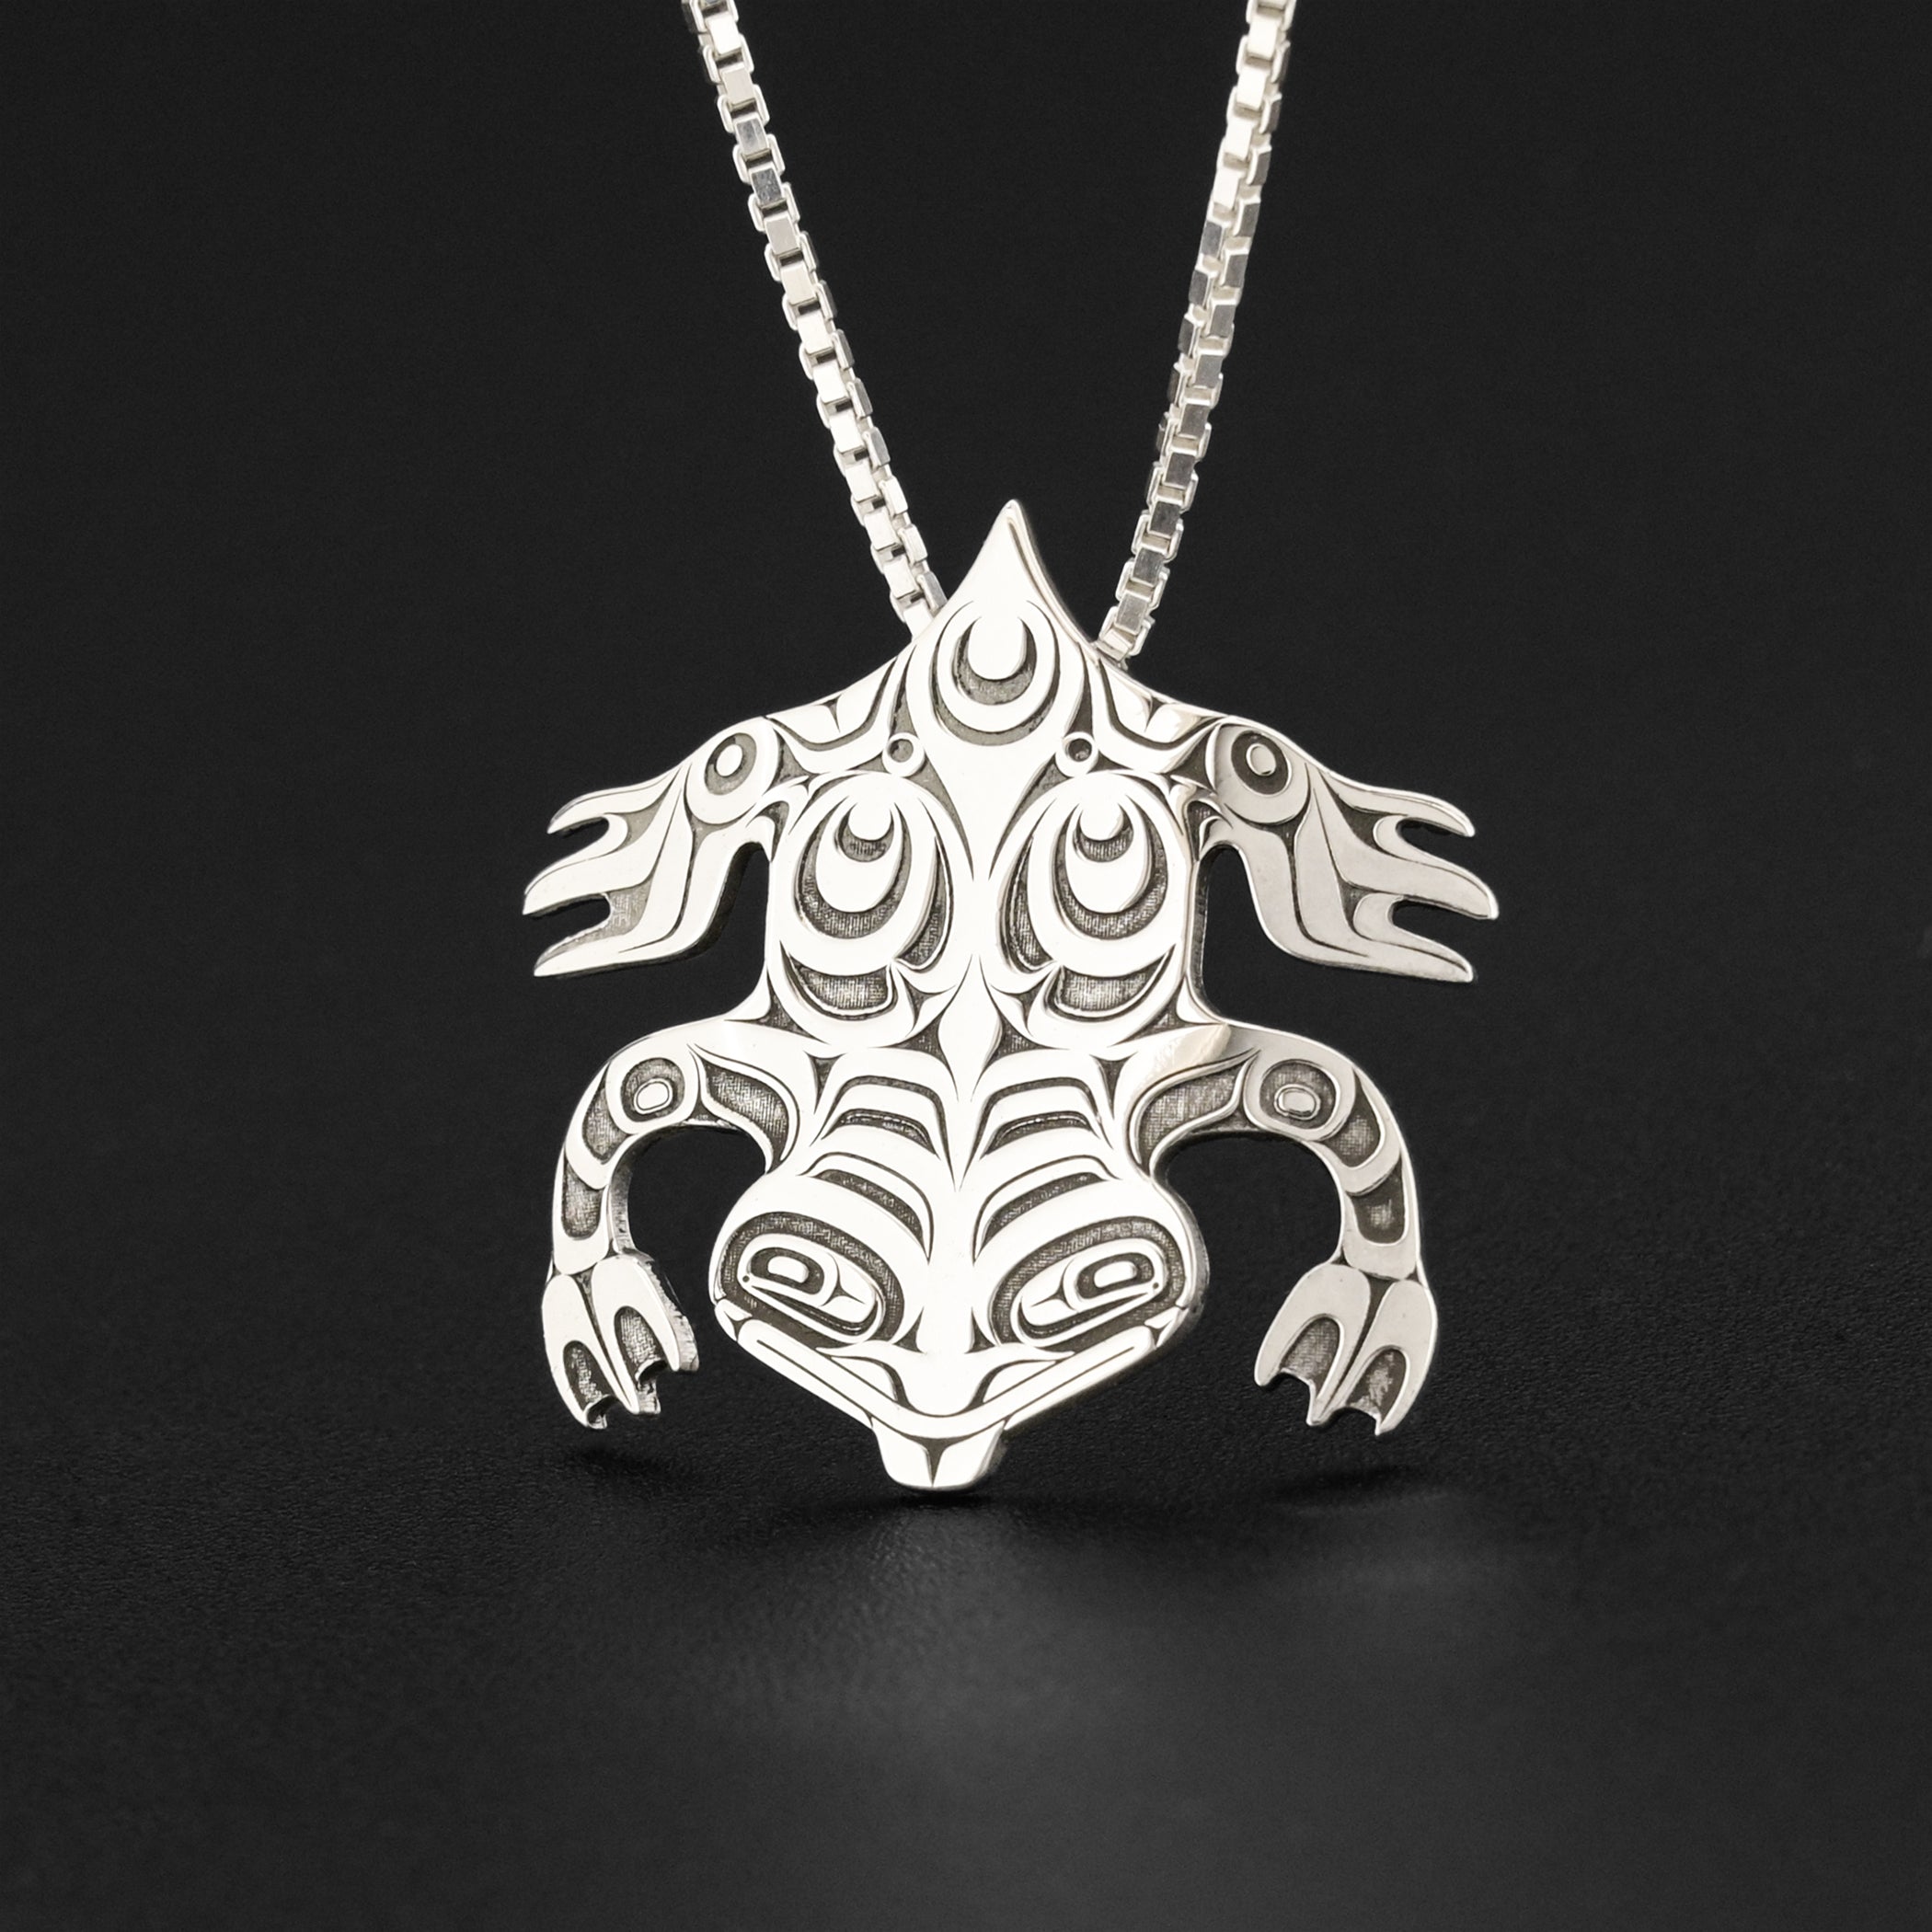 Polished 925 Sterling Silver Frog Pendant Necklace